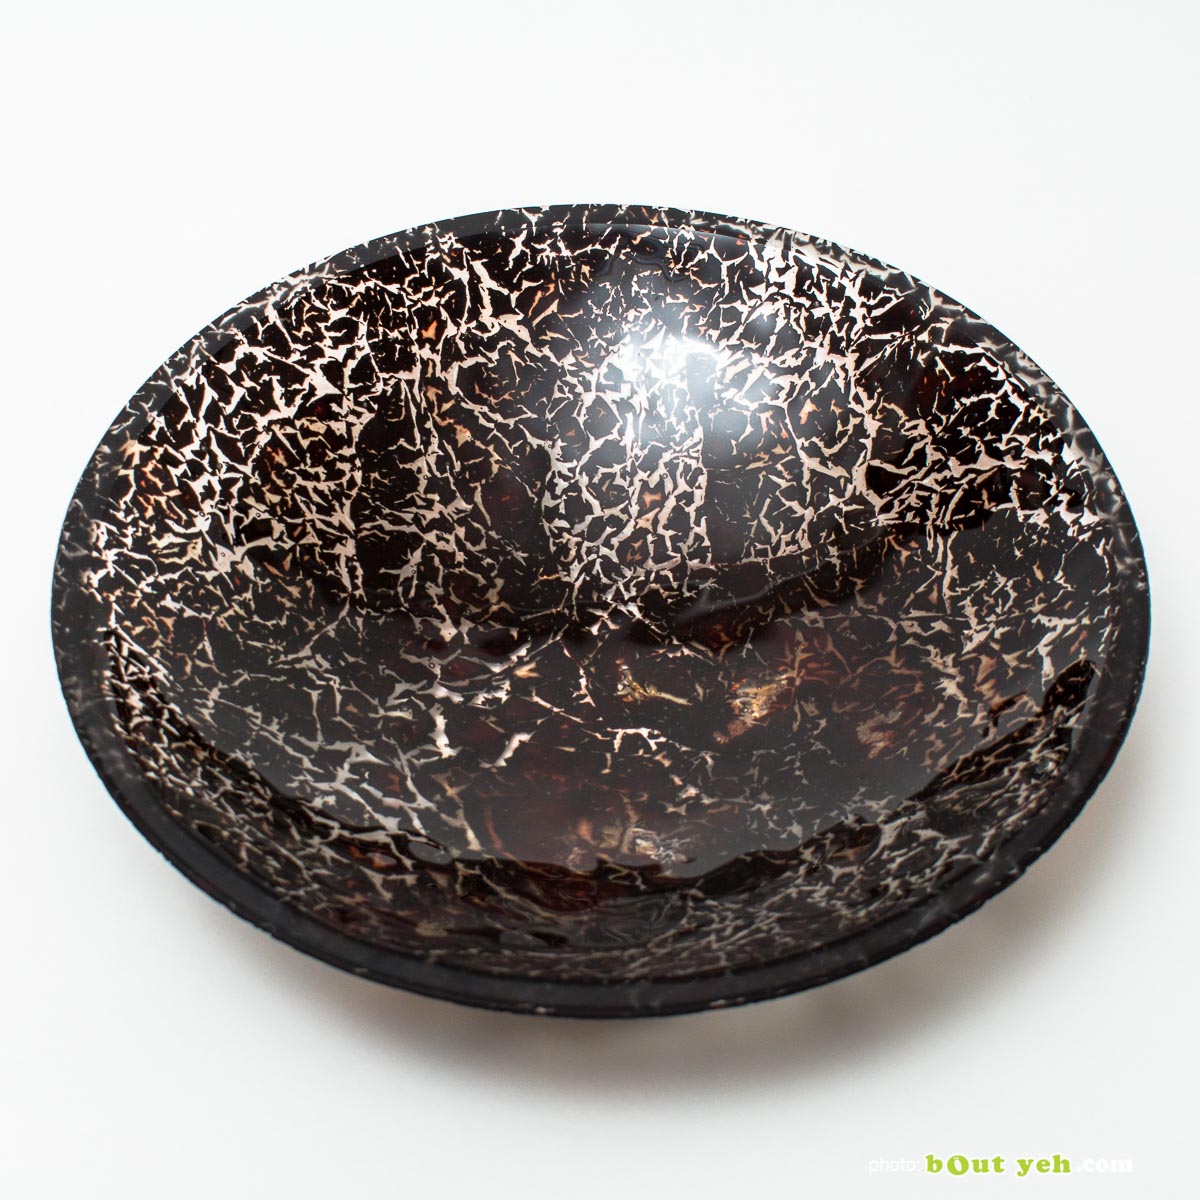 Contemporary bullseye glass bowl in panta rhei red by Keith Sheppard Irish glassware - photo 1616